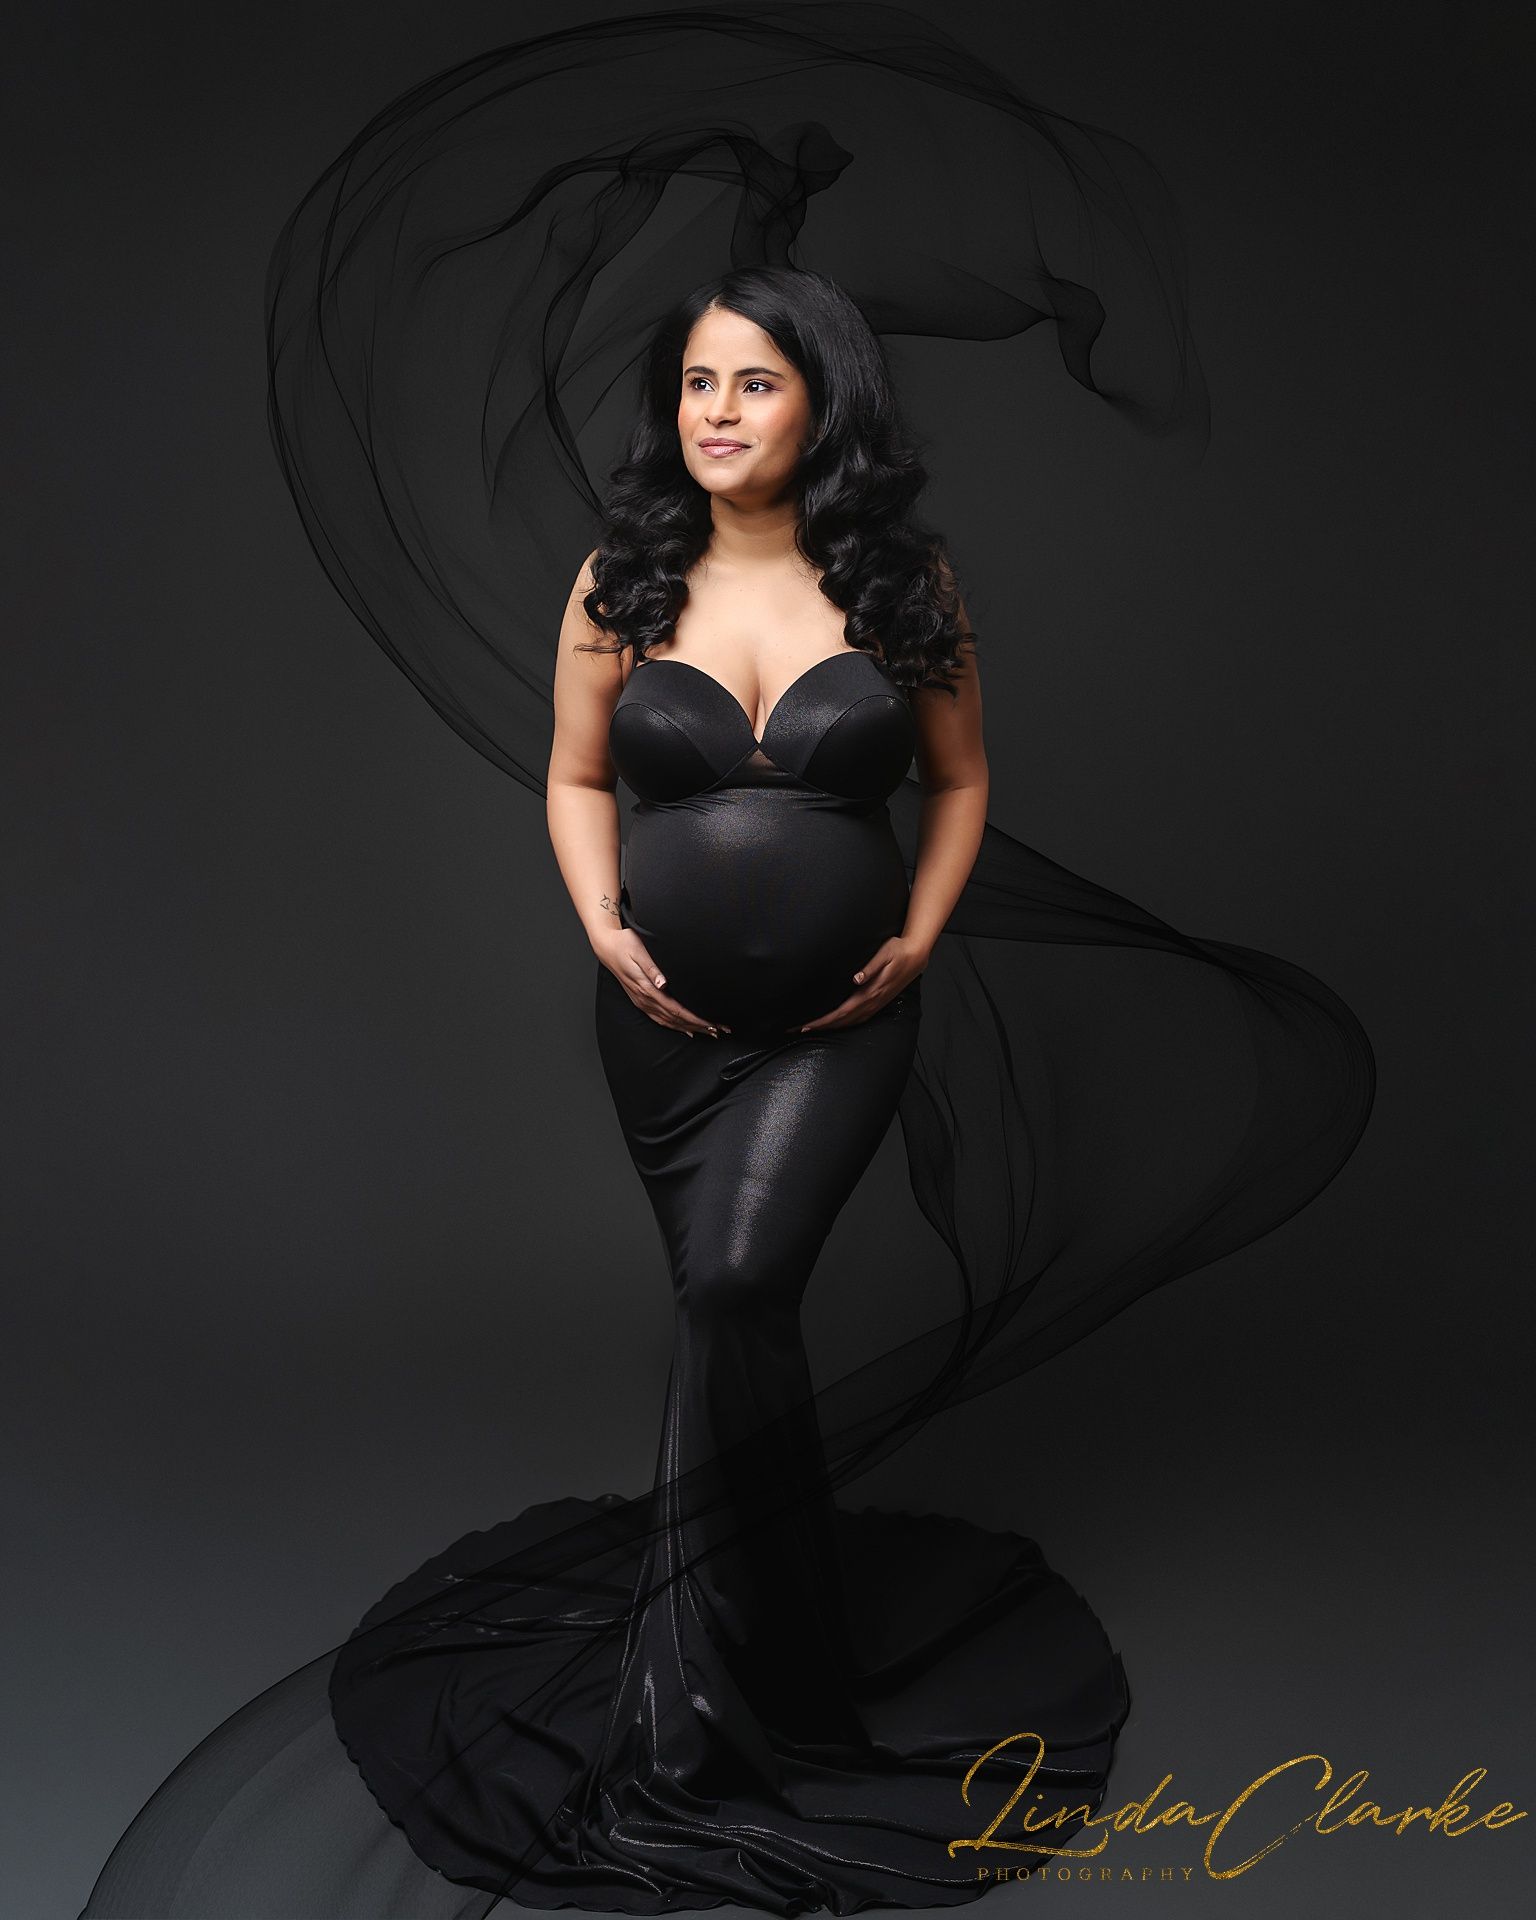 Maternity Photographer Dublin
Maternity Photography Dublin
Maternity Photo shoot